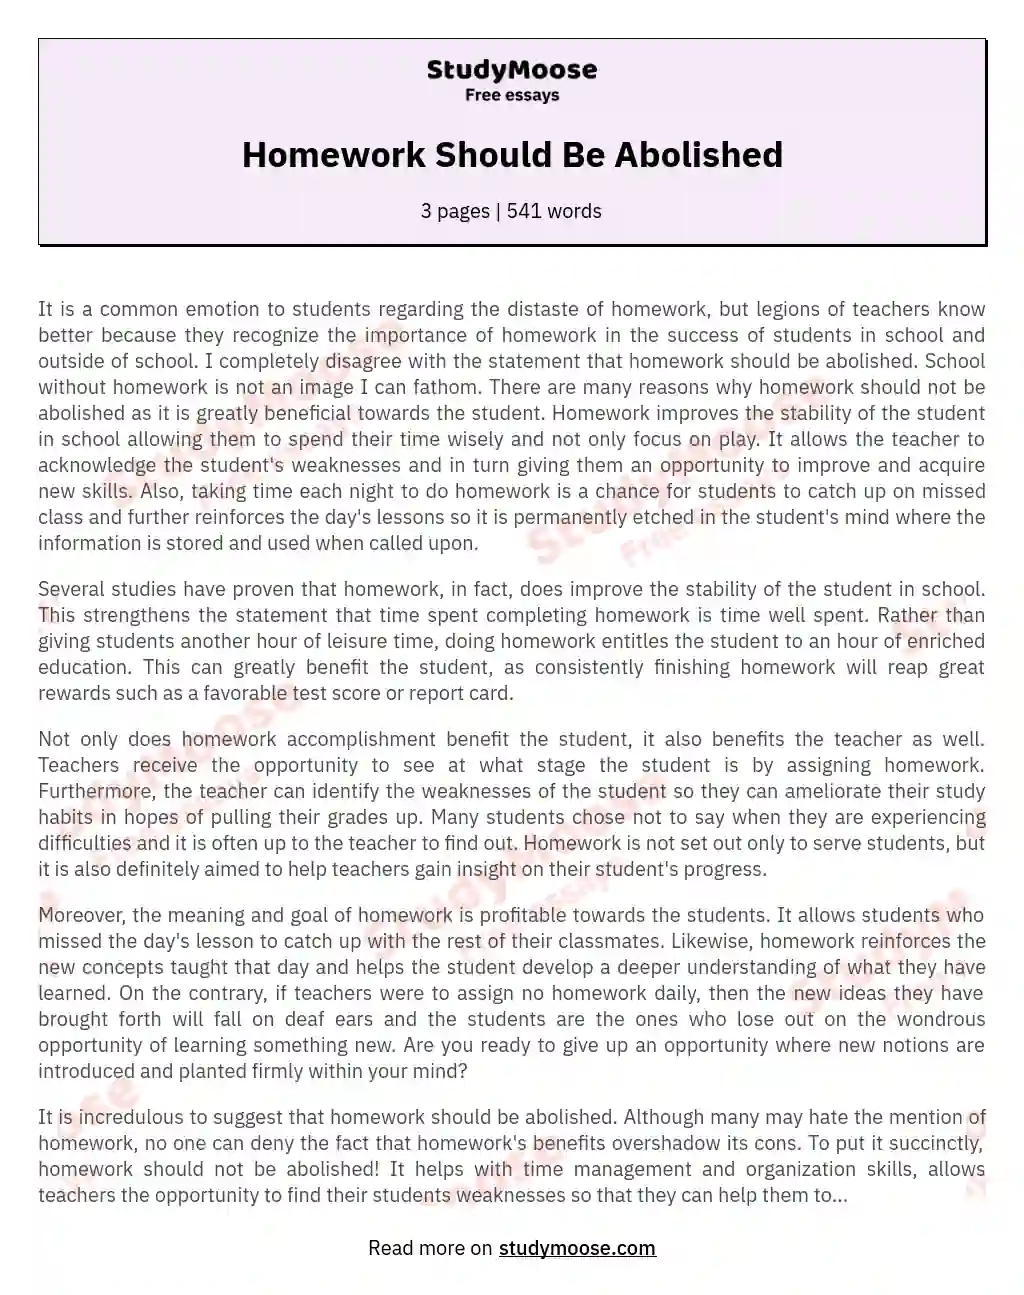 homework banned essay